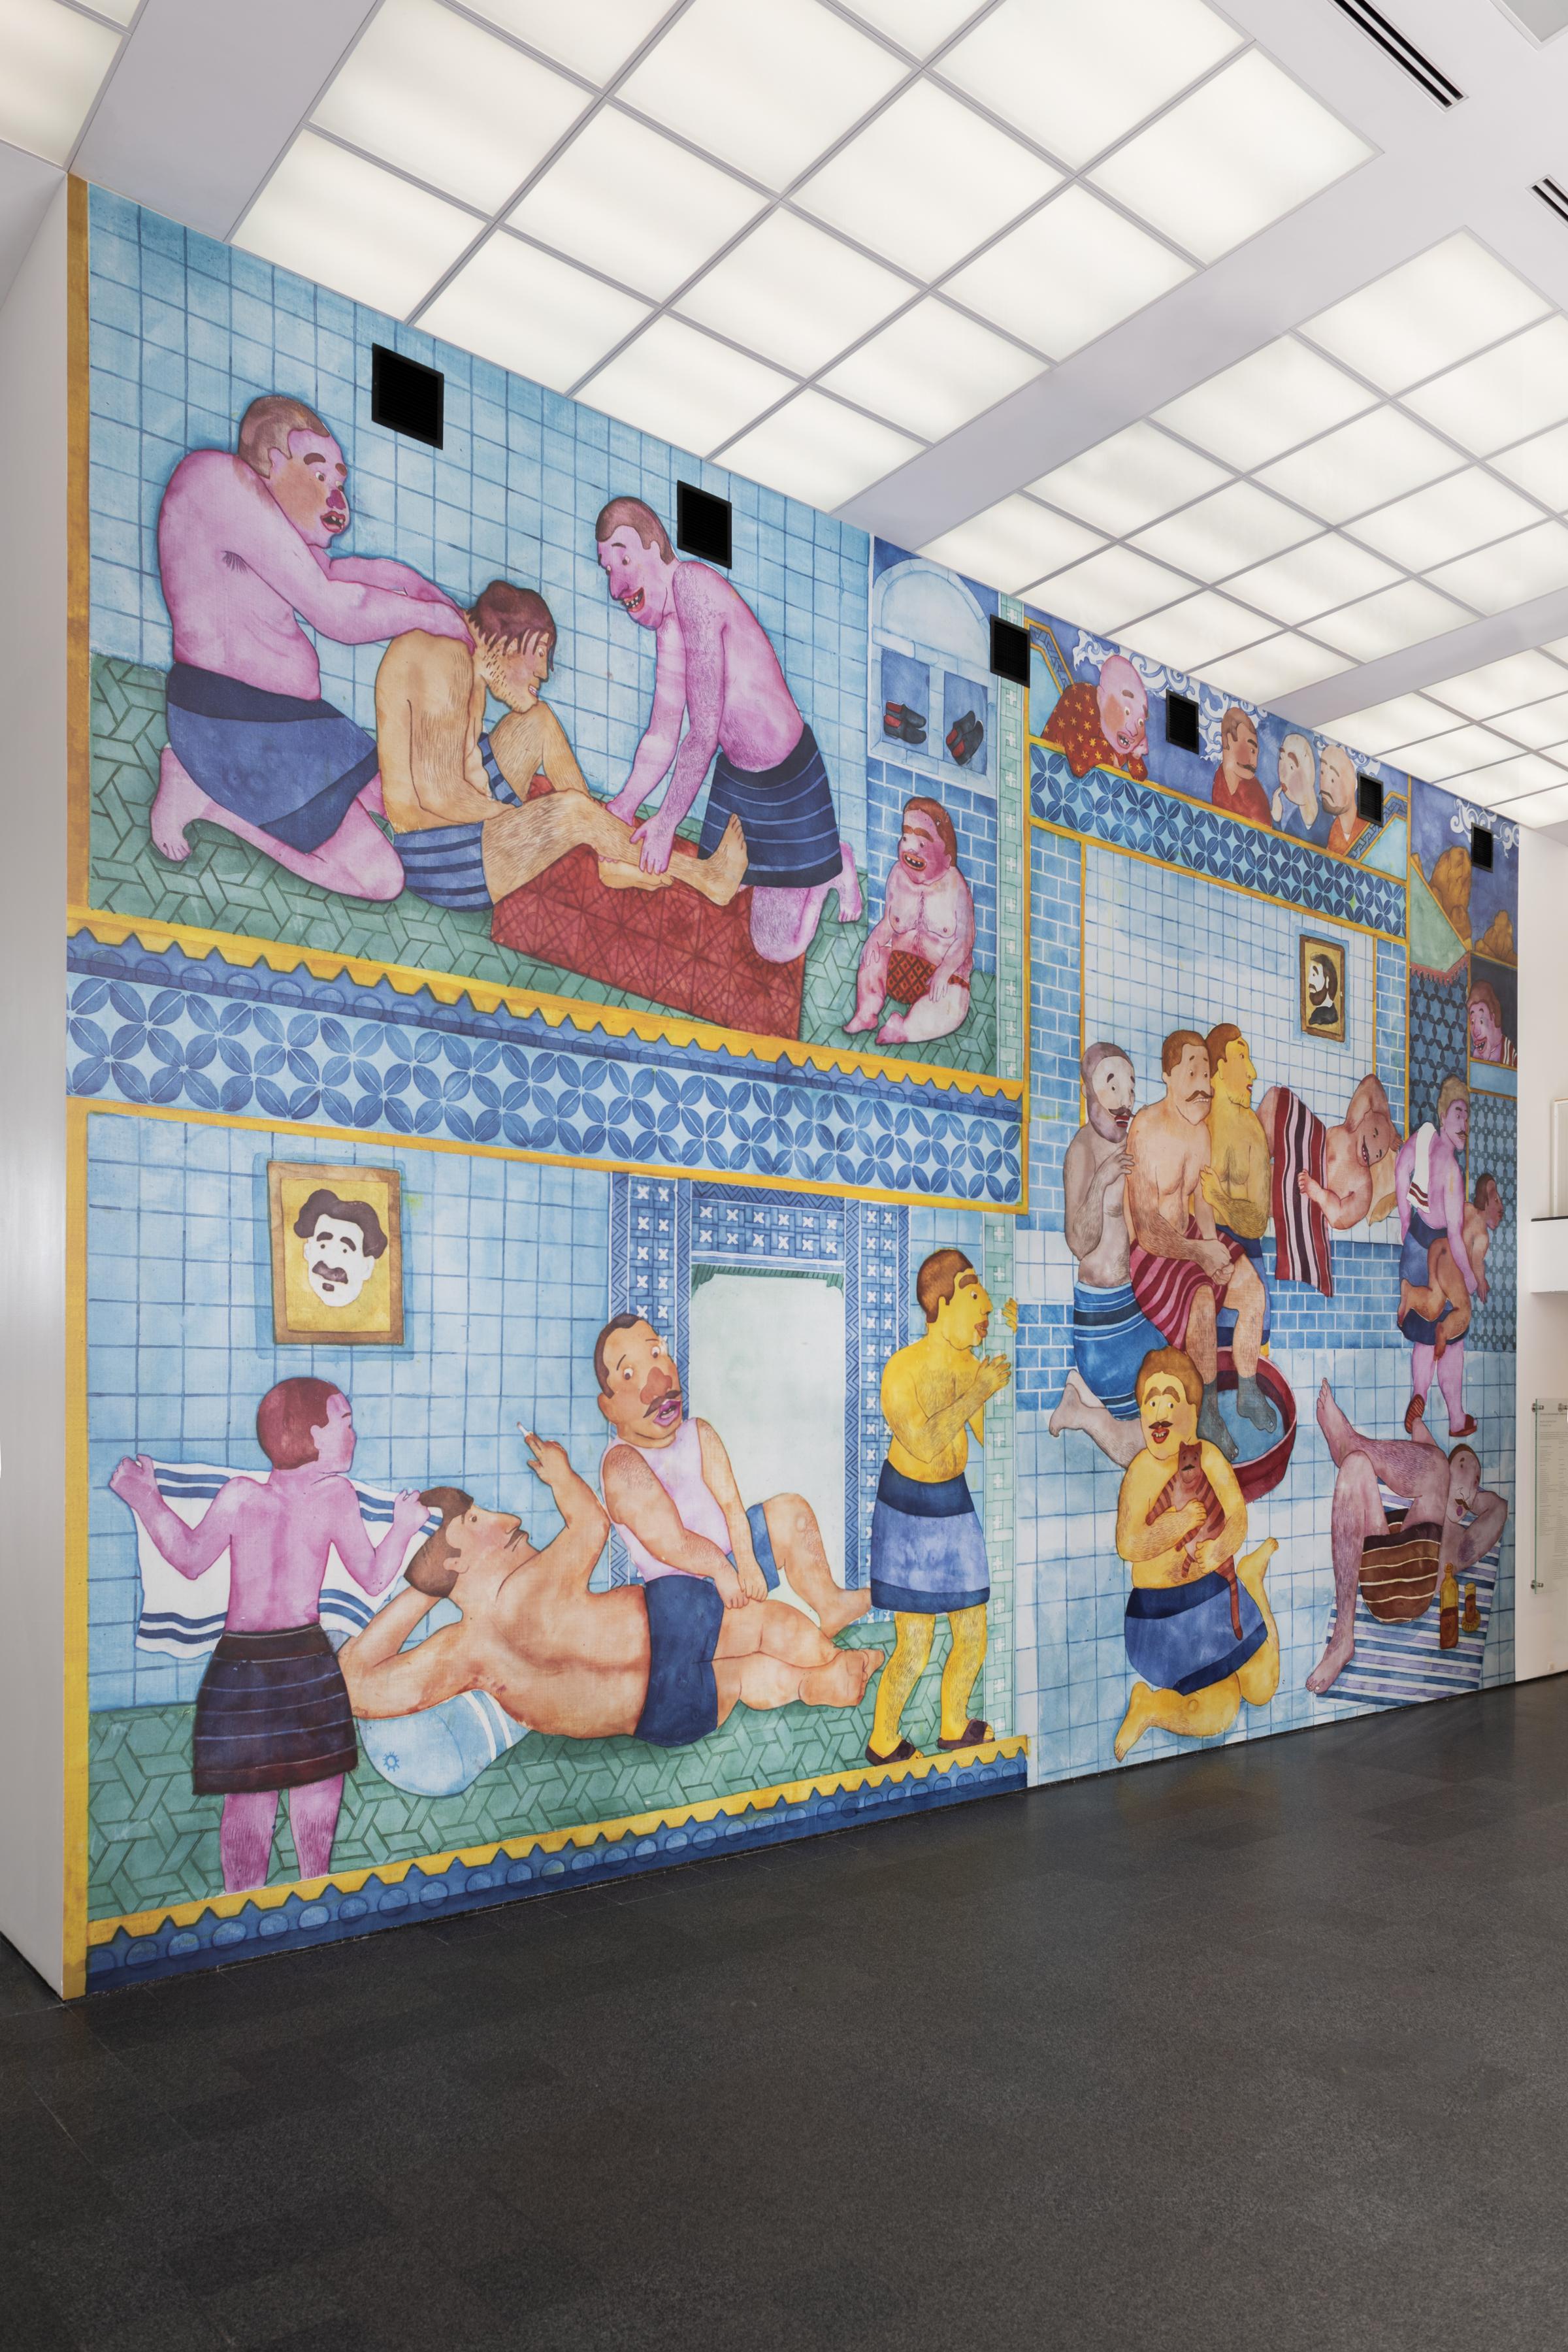 A wall mural depicting a bathhouse scene